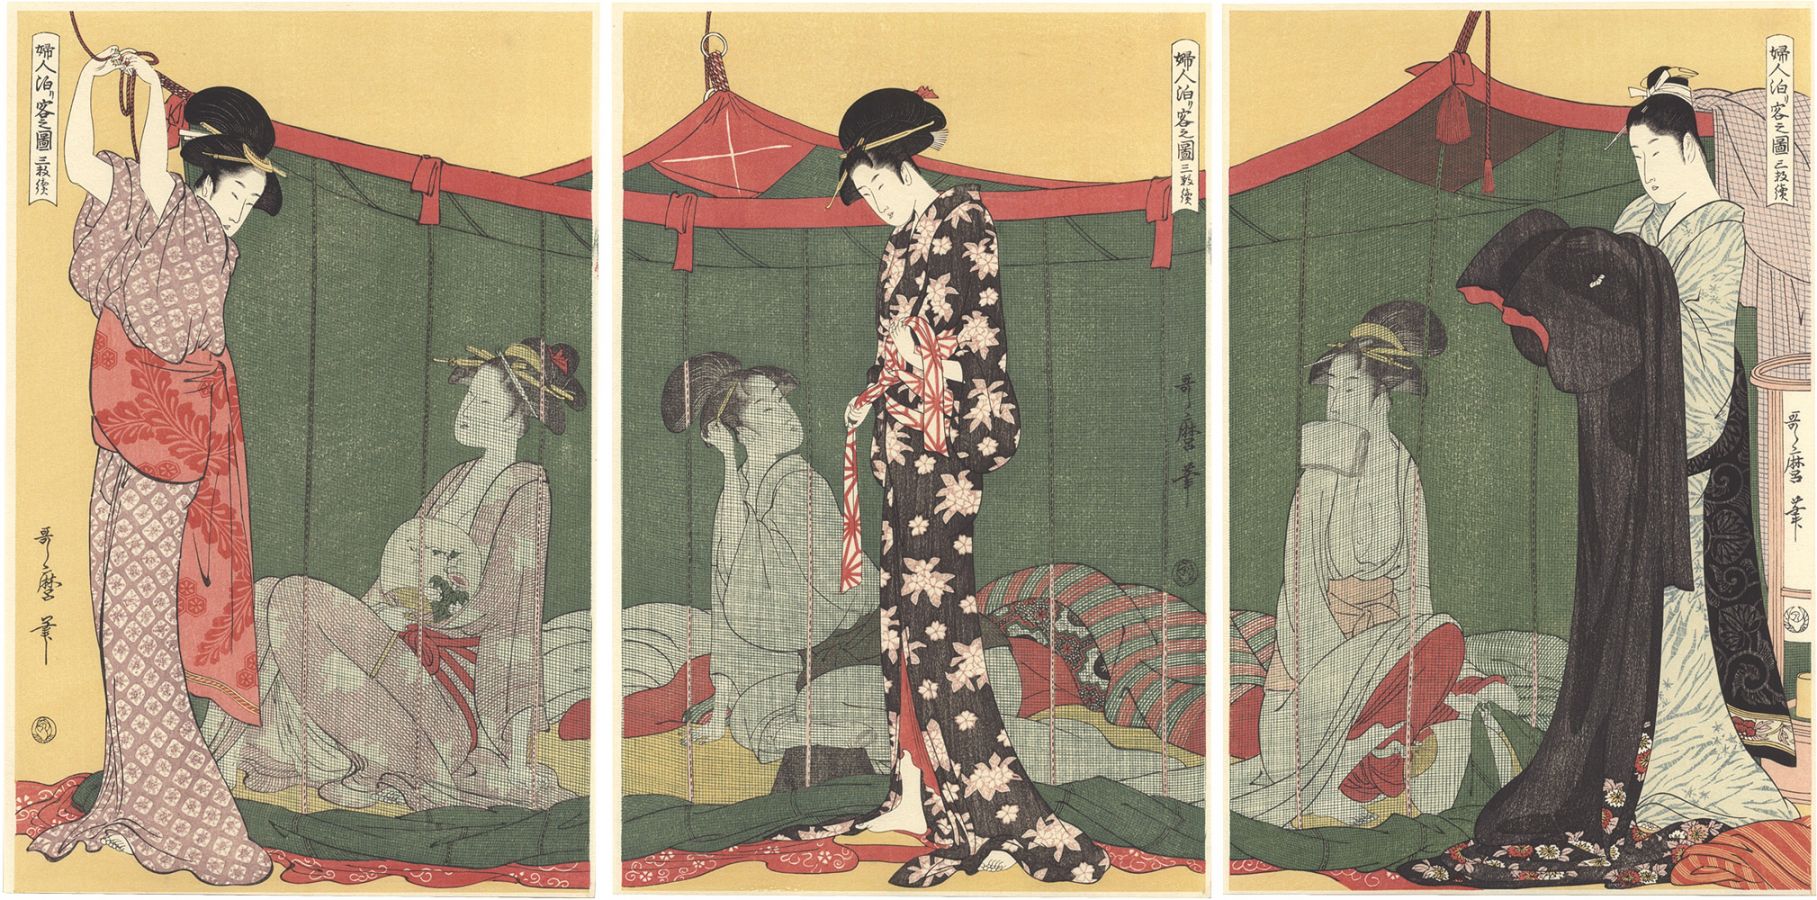 Utamaro “Woman Lodgers under the Mosquito Net【Reproduction】 ”／